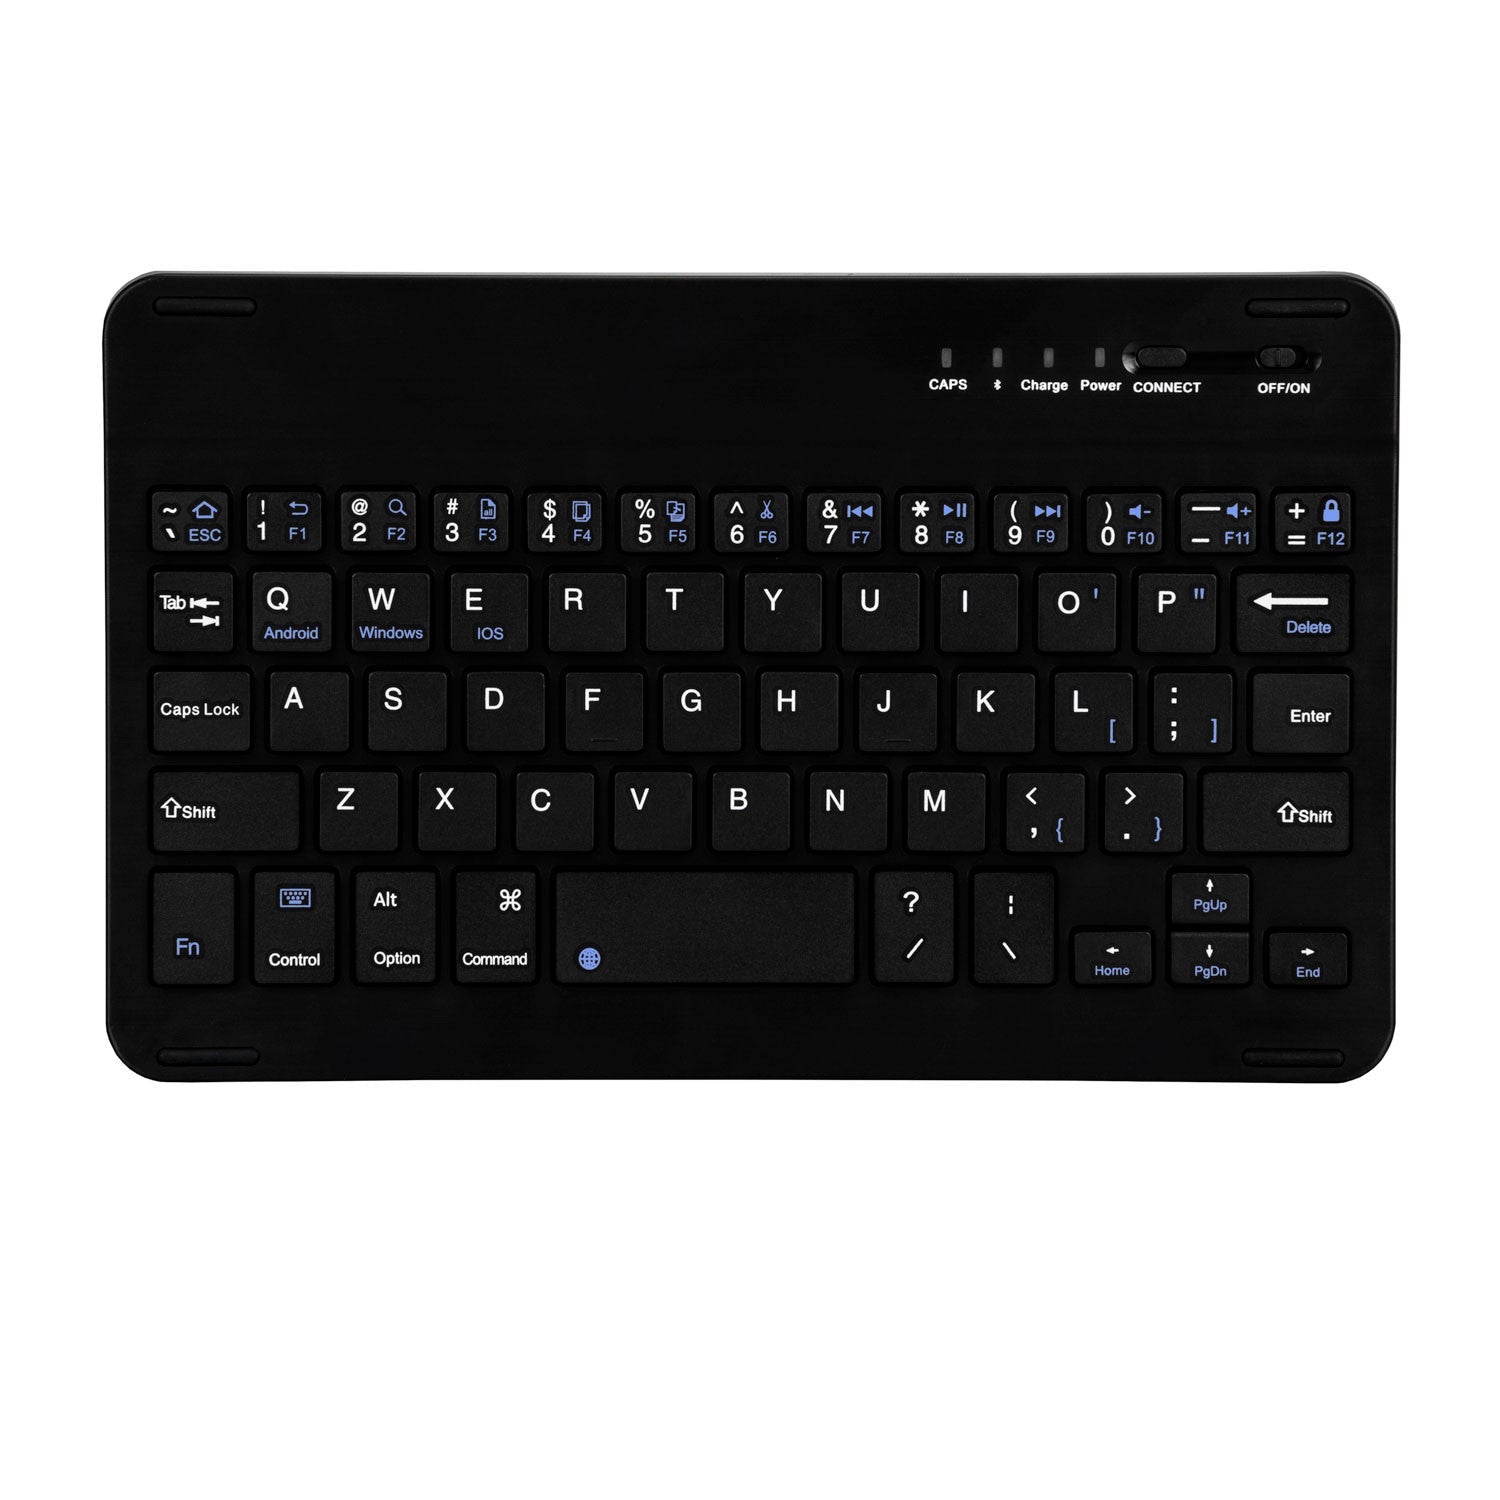  Qwecfly Teclado inalámbrico retroiluminado, ultra delgado de  tamaño completo con teclado numérico, 2.4 GHz, silencioso y recargable,  elegante teclado plano de perfil bajo para PC, superficie, laptop, :  Electrónica